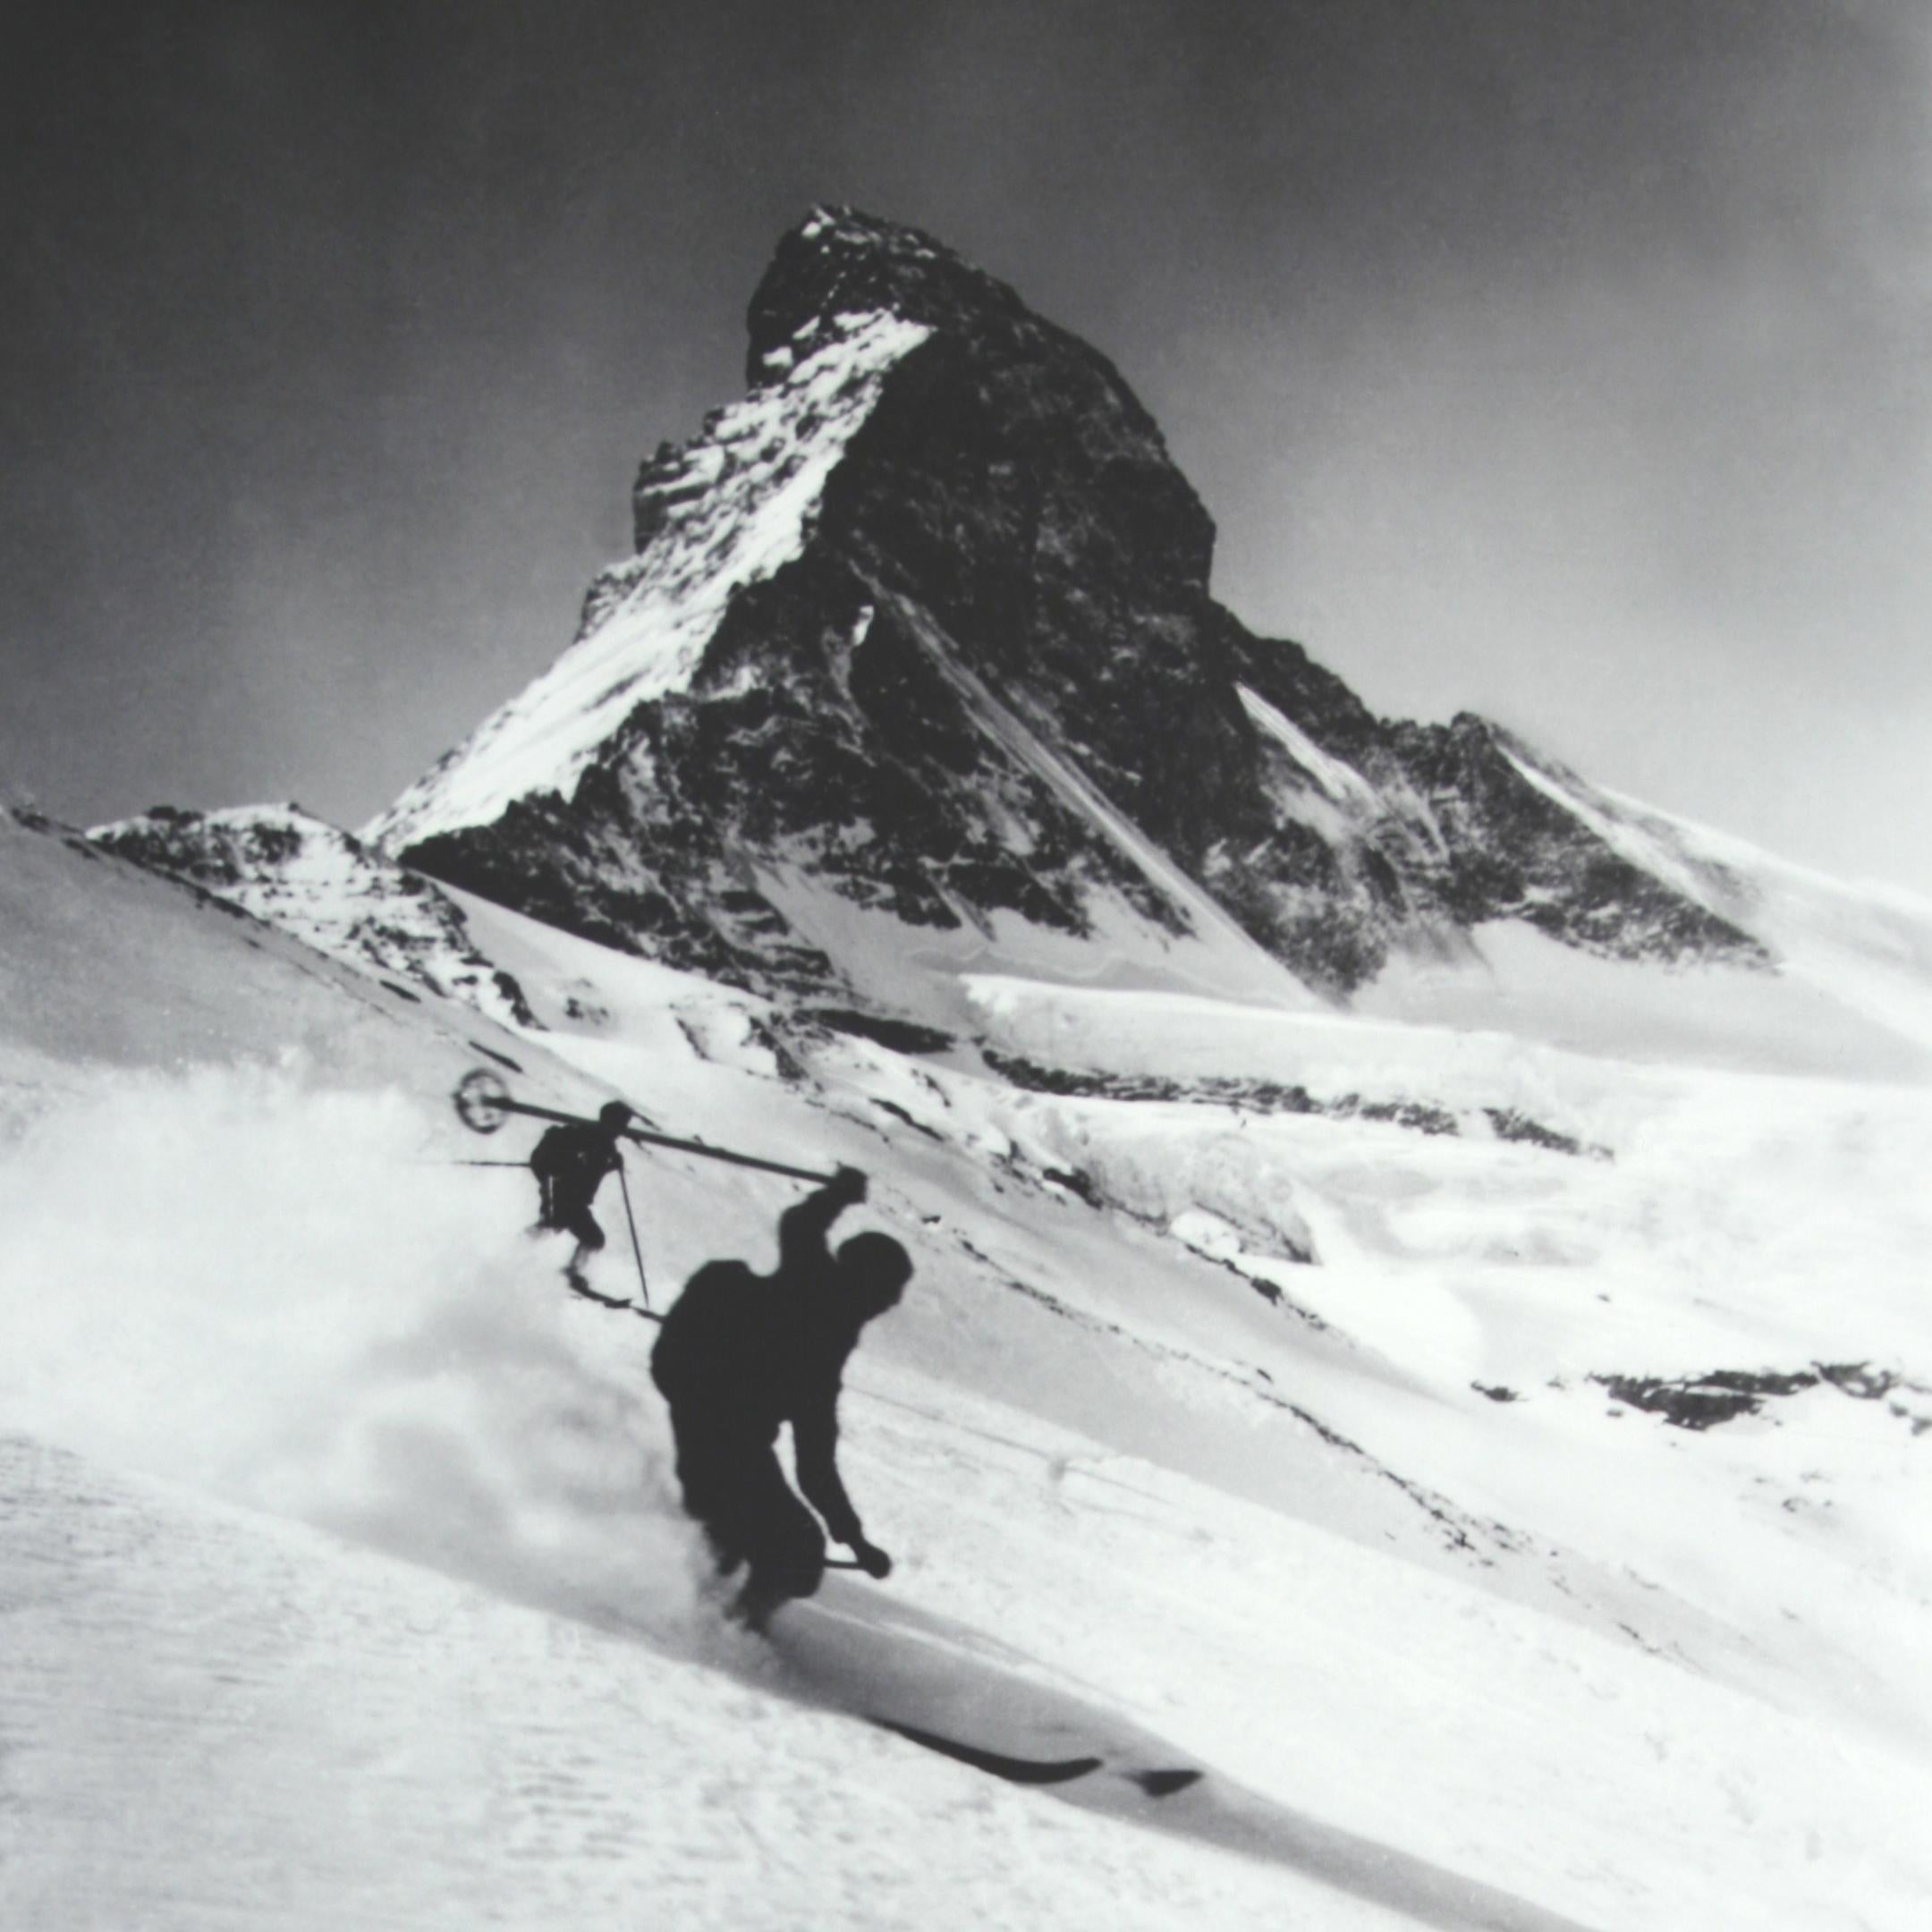 Alpine Ski Photograph 'Matterhorn and Skiers', Taken from Original ...